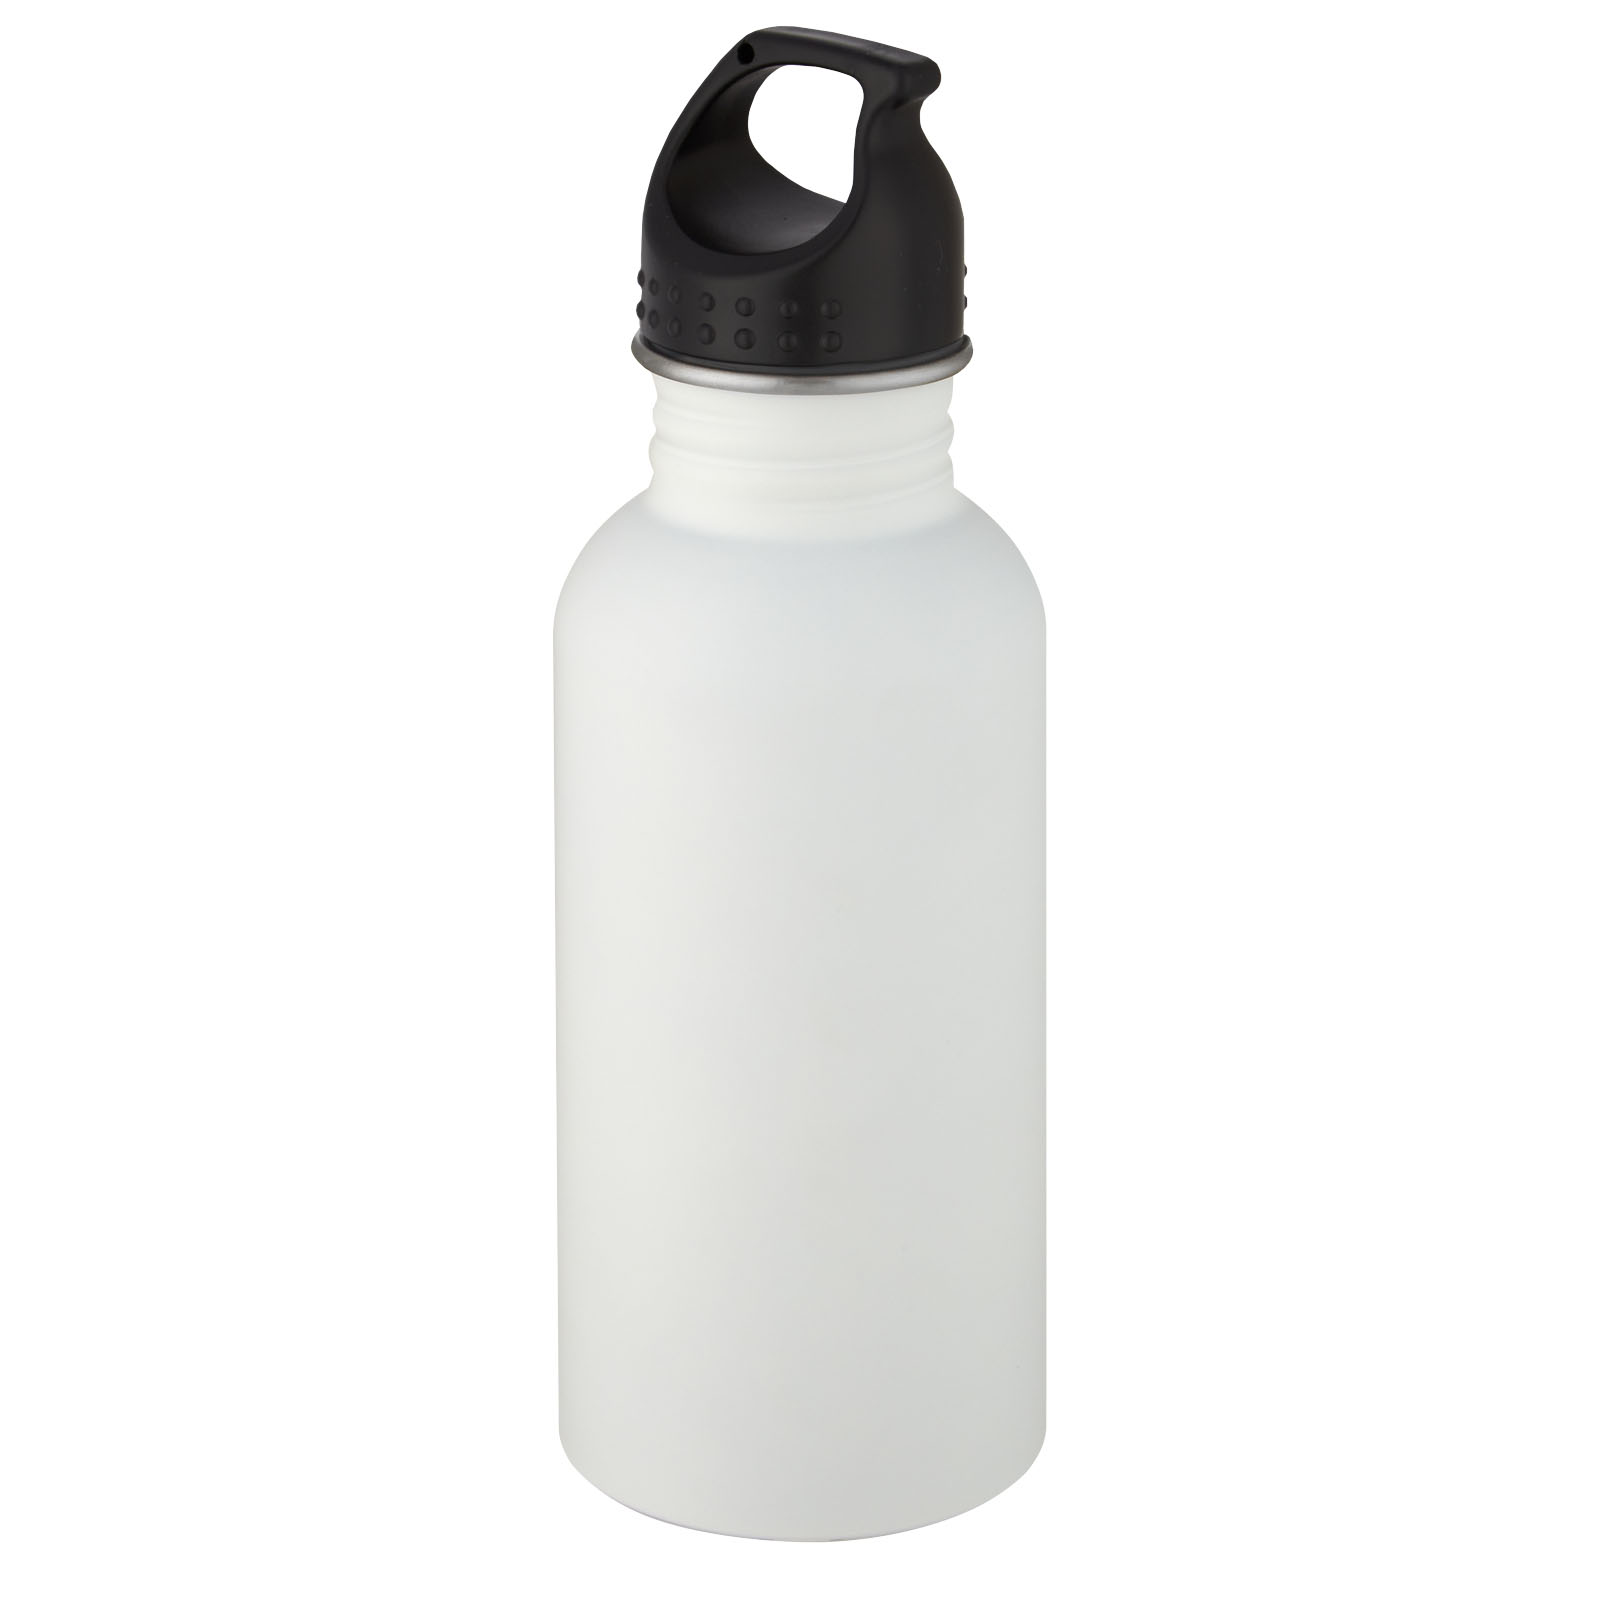 Advertising Water bottles - Luca 500 ml stainless steel water bottle